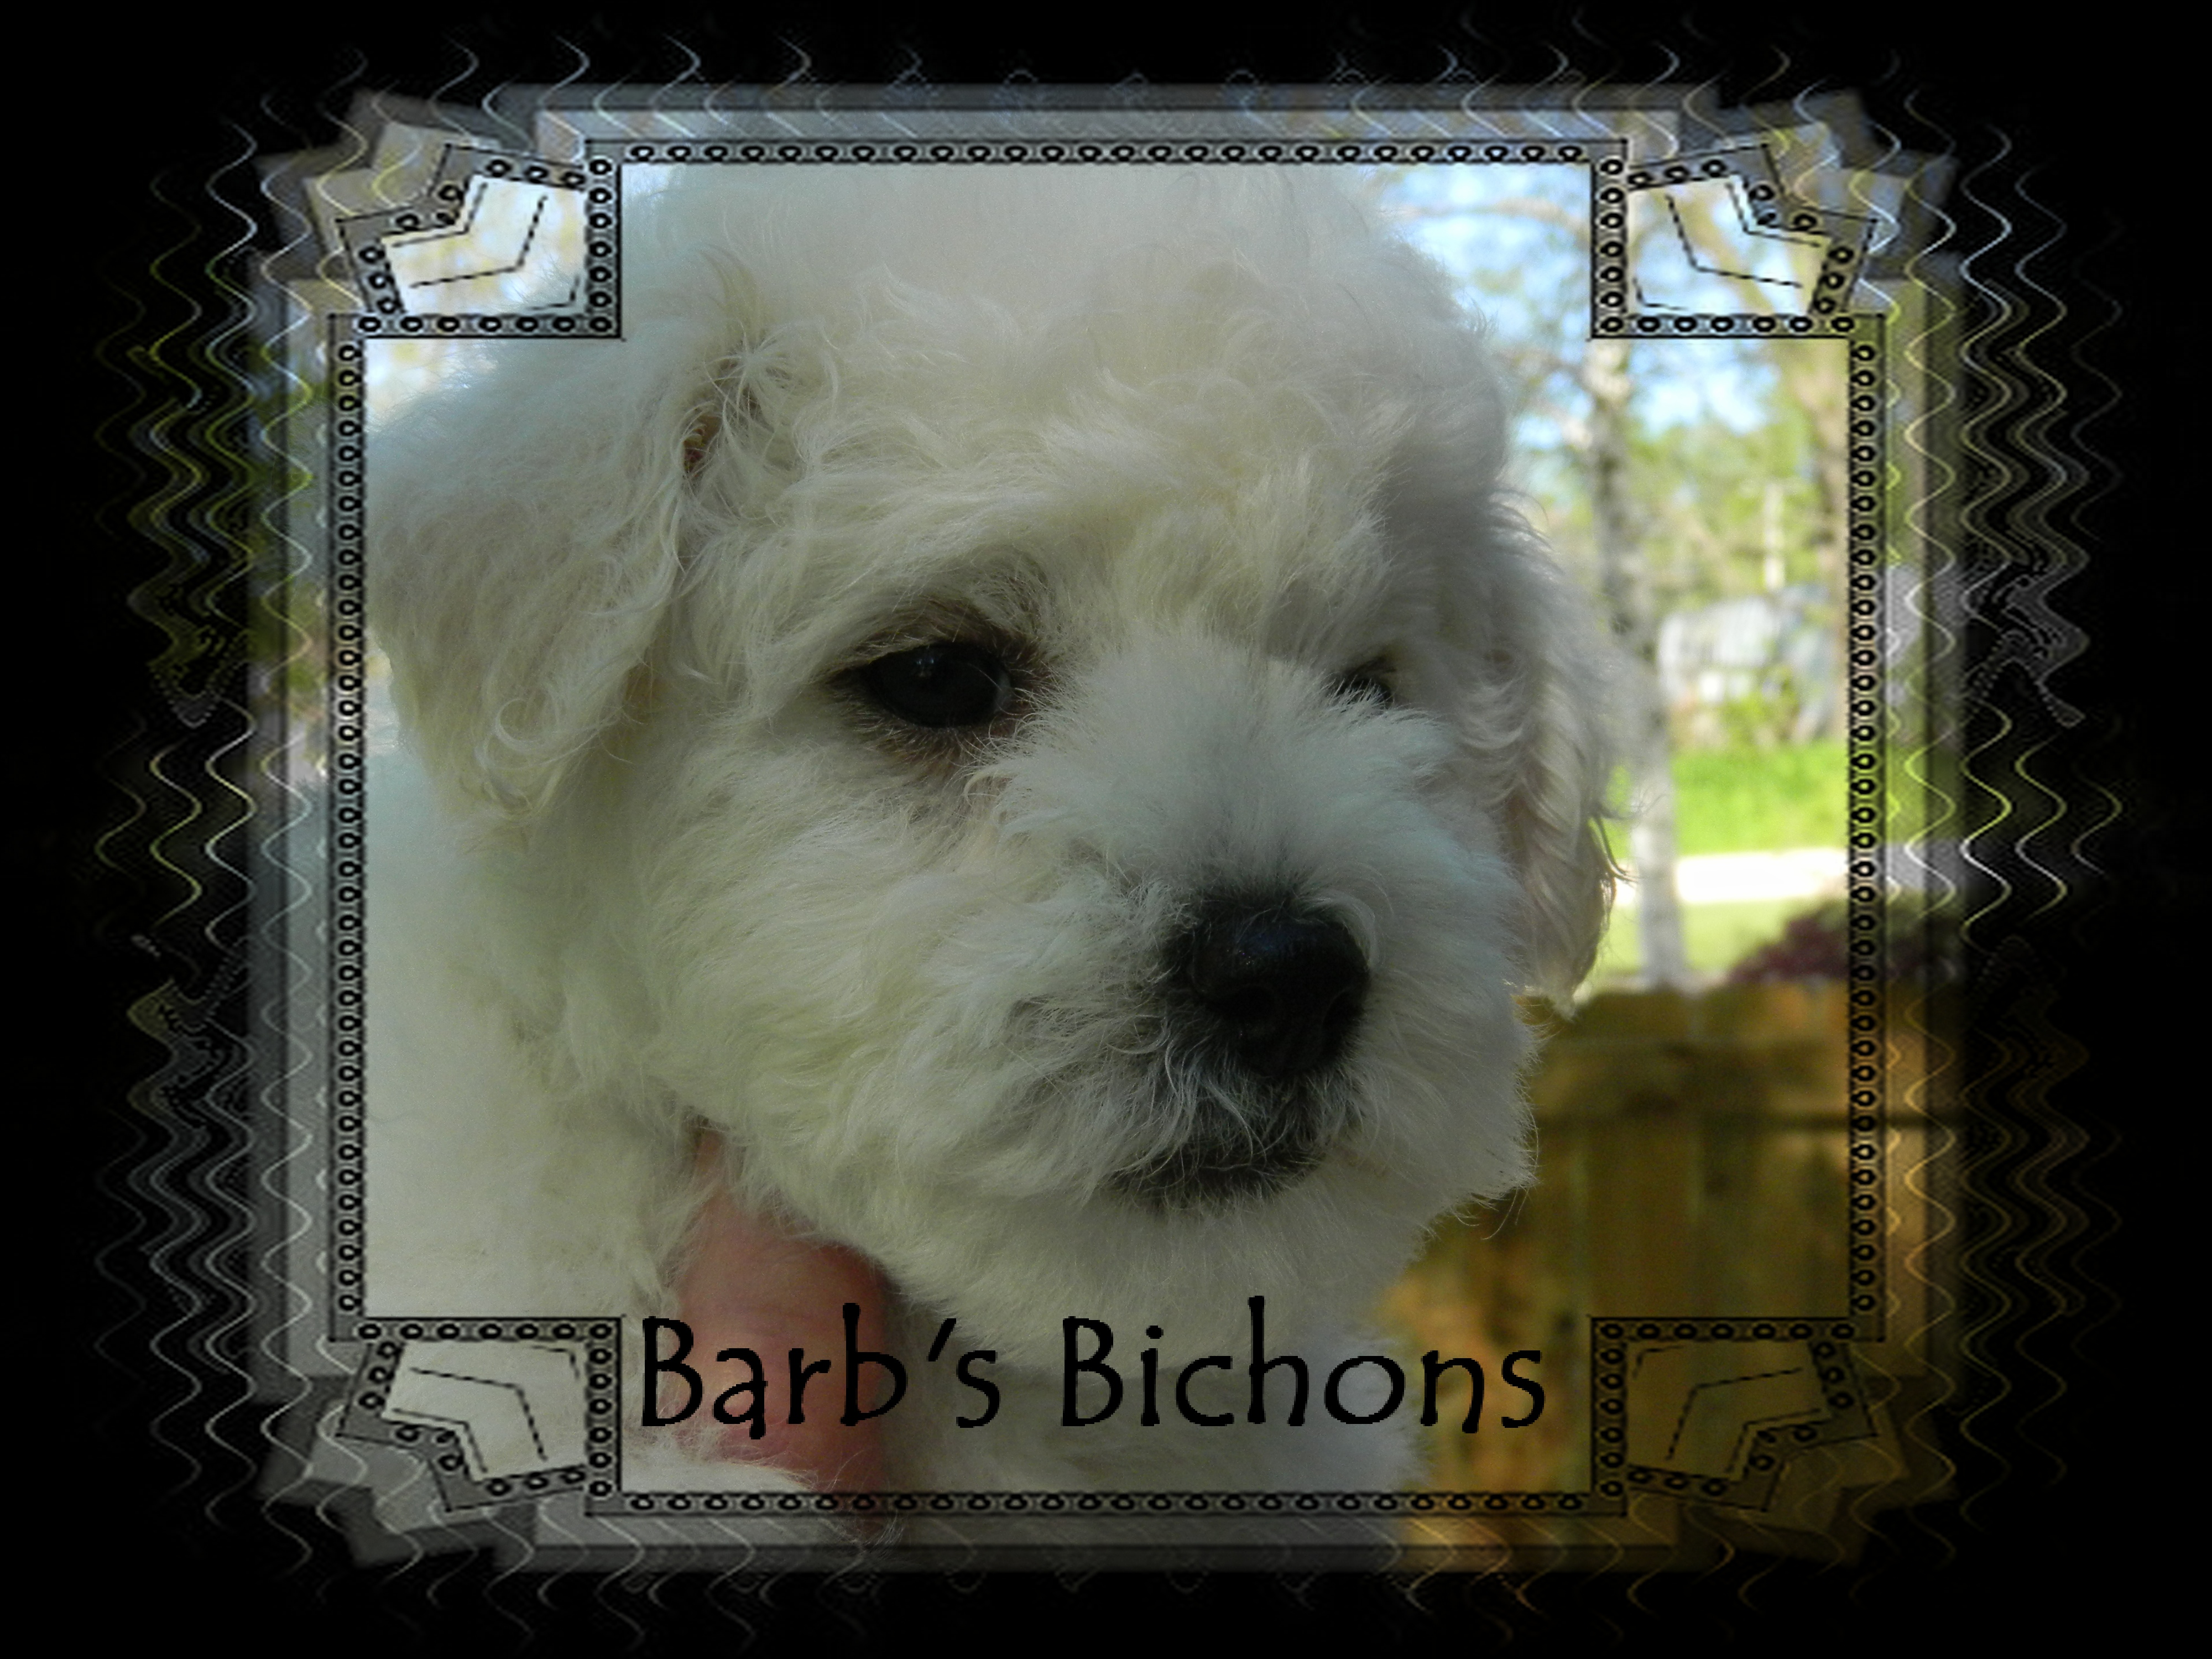 Champion sired female Bichon Frise puppy